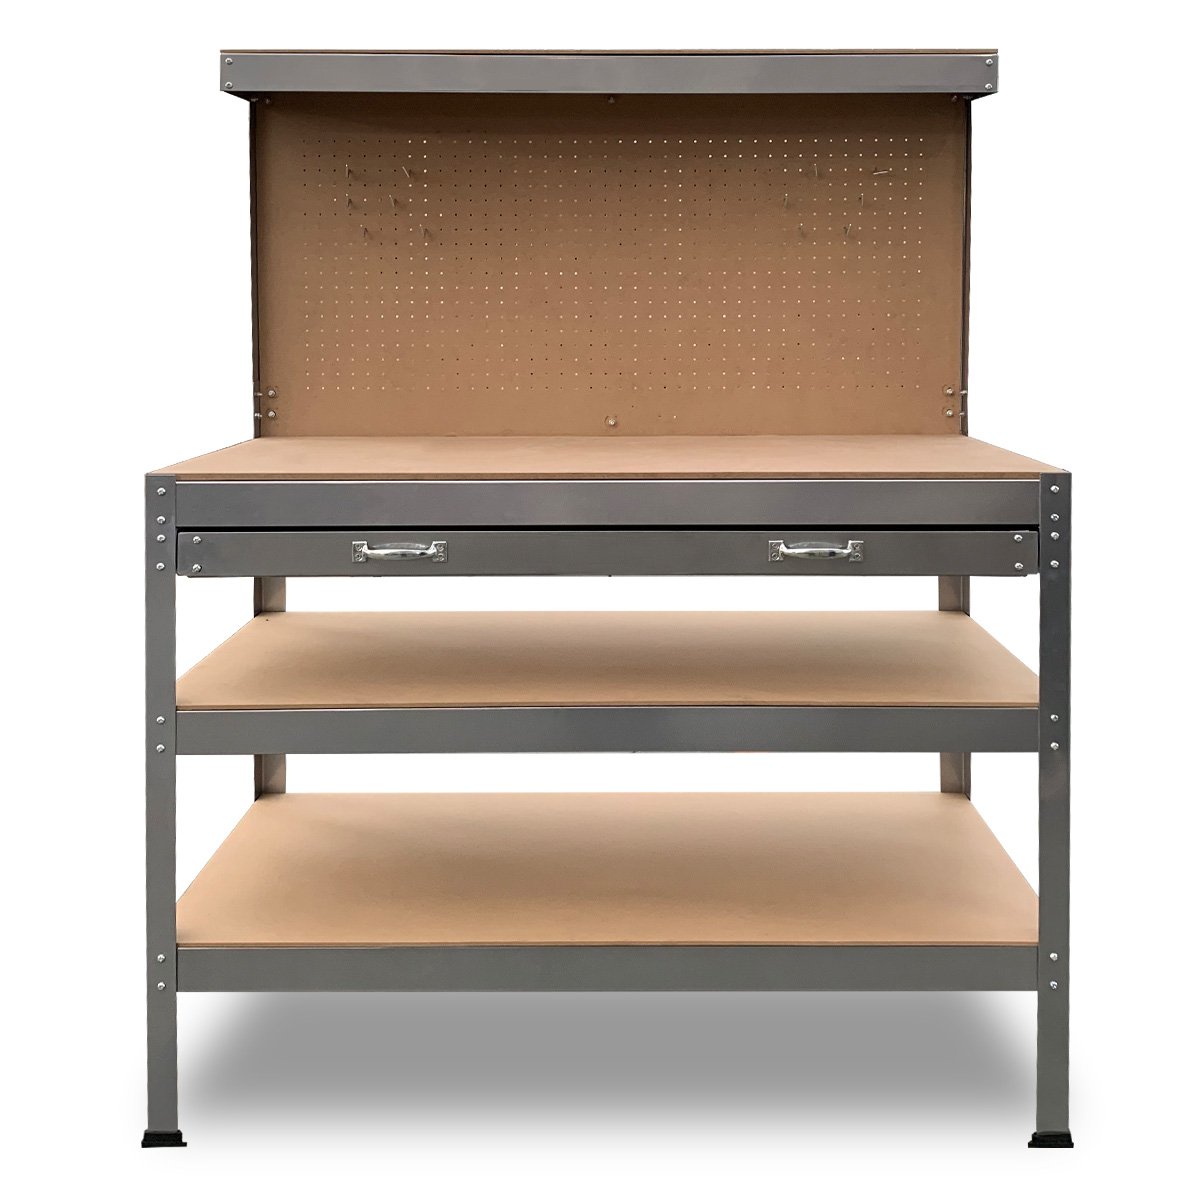 Kartrite 3-layered Work Bench Garage Storage Table Tool Shop Shelf Silver - SILBERSHELL